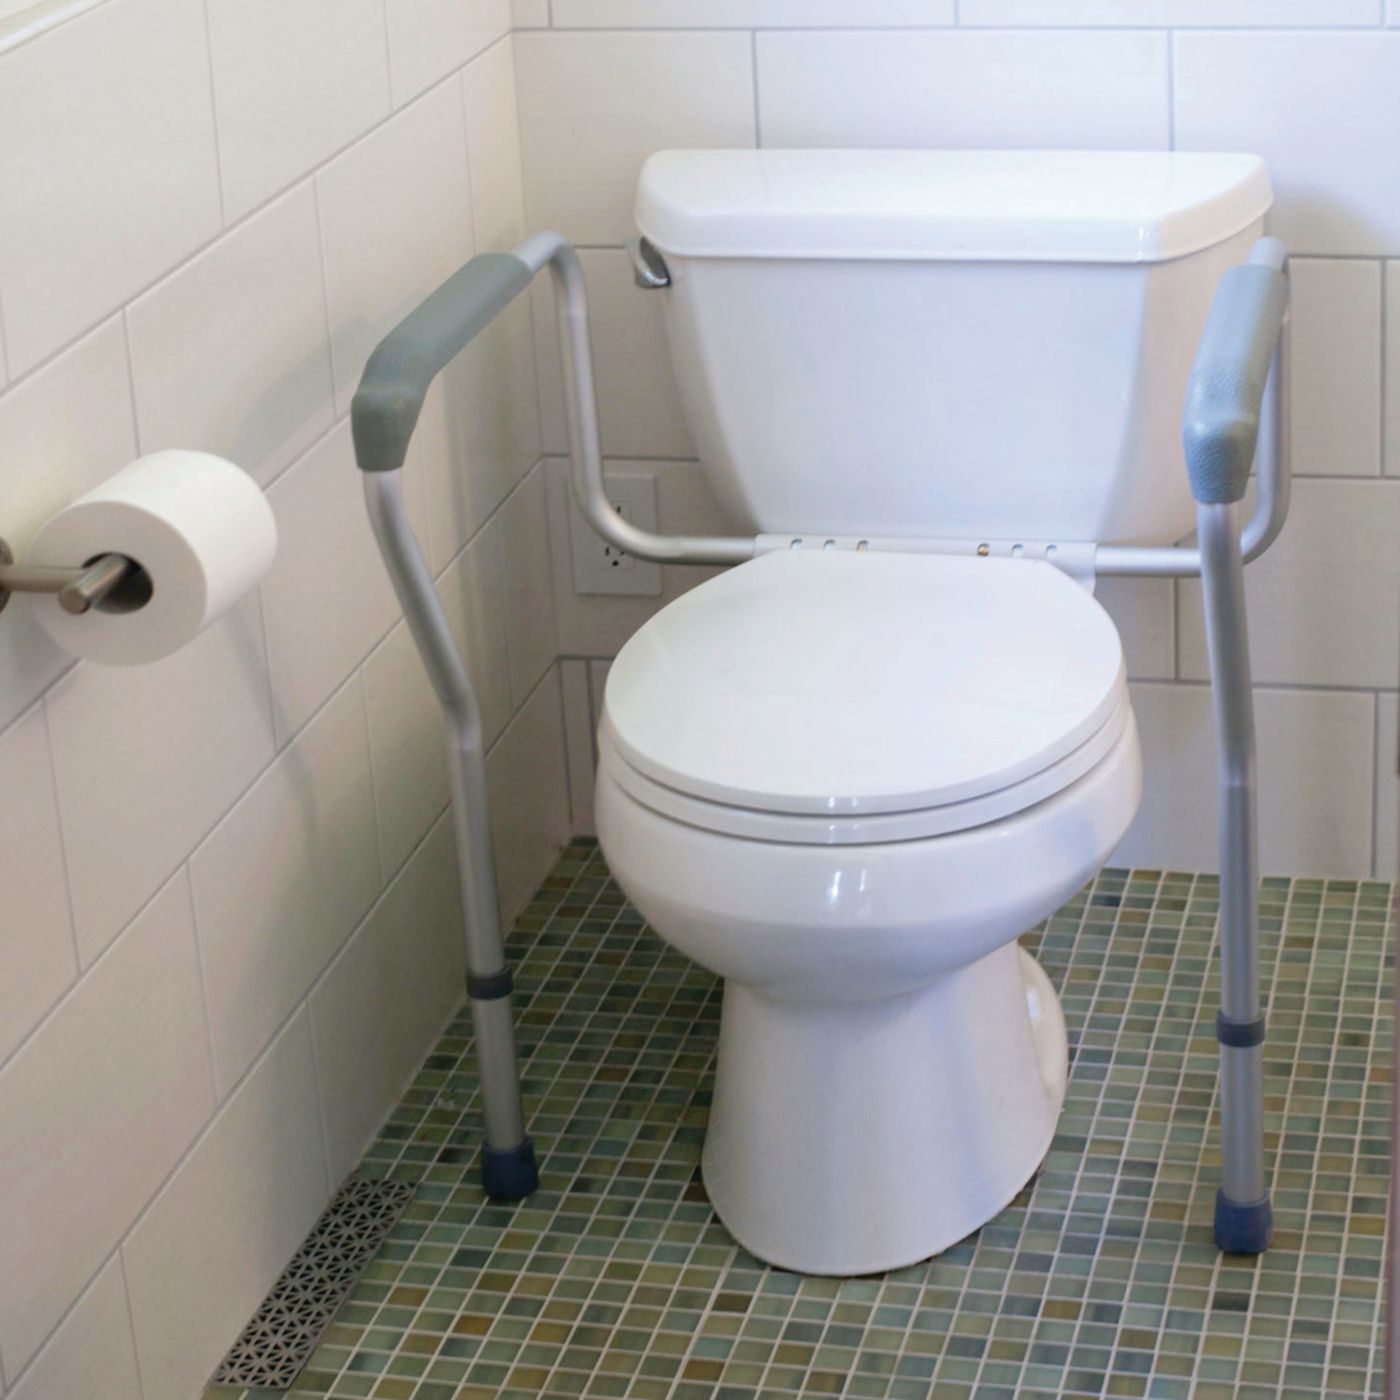 Homecraft Toilet Safety Frame Product Image